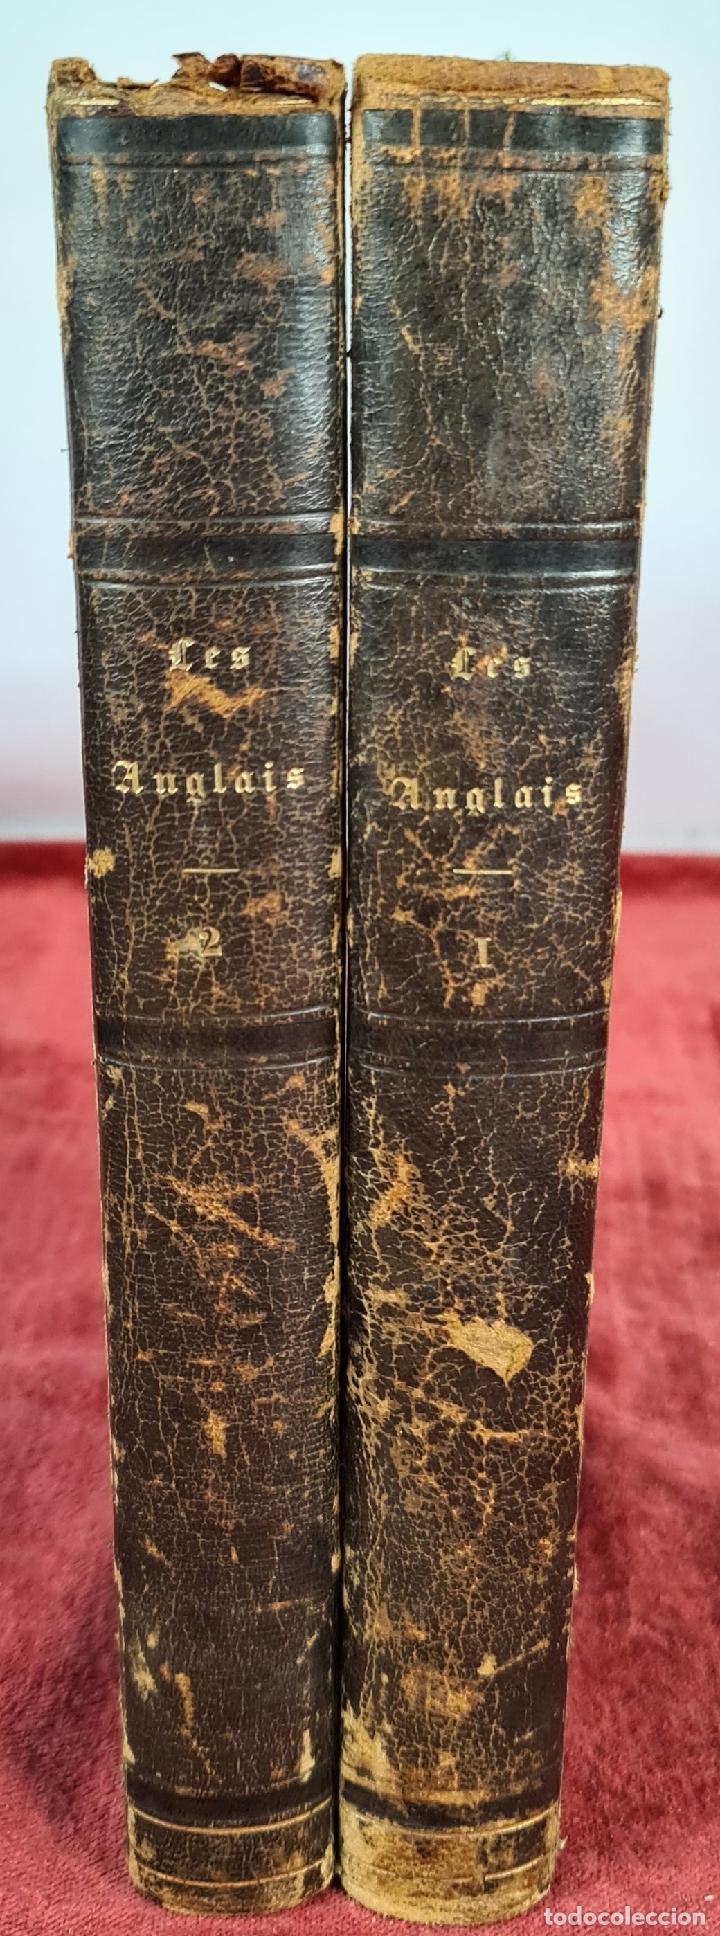 LES ANGLAIS. CATEDRATICOS LITERARIOS INGLESES. 2 VOL. L. CURMER. 1840. (Libros Antiguos, Raros y Curiosos - Pensamiento - Sociología)